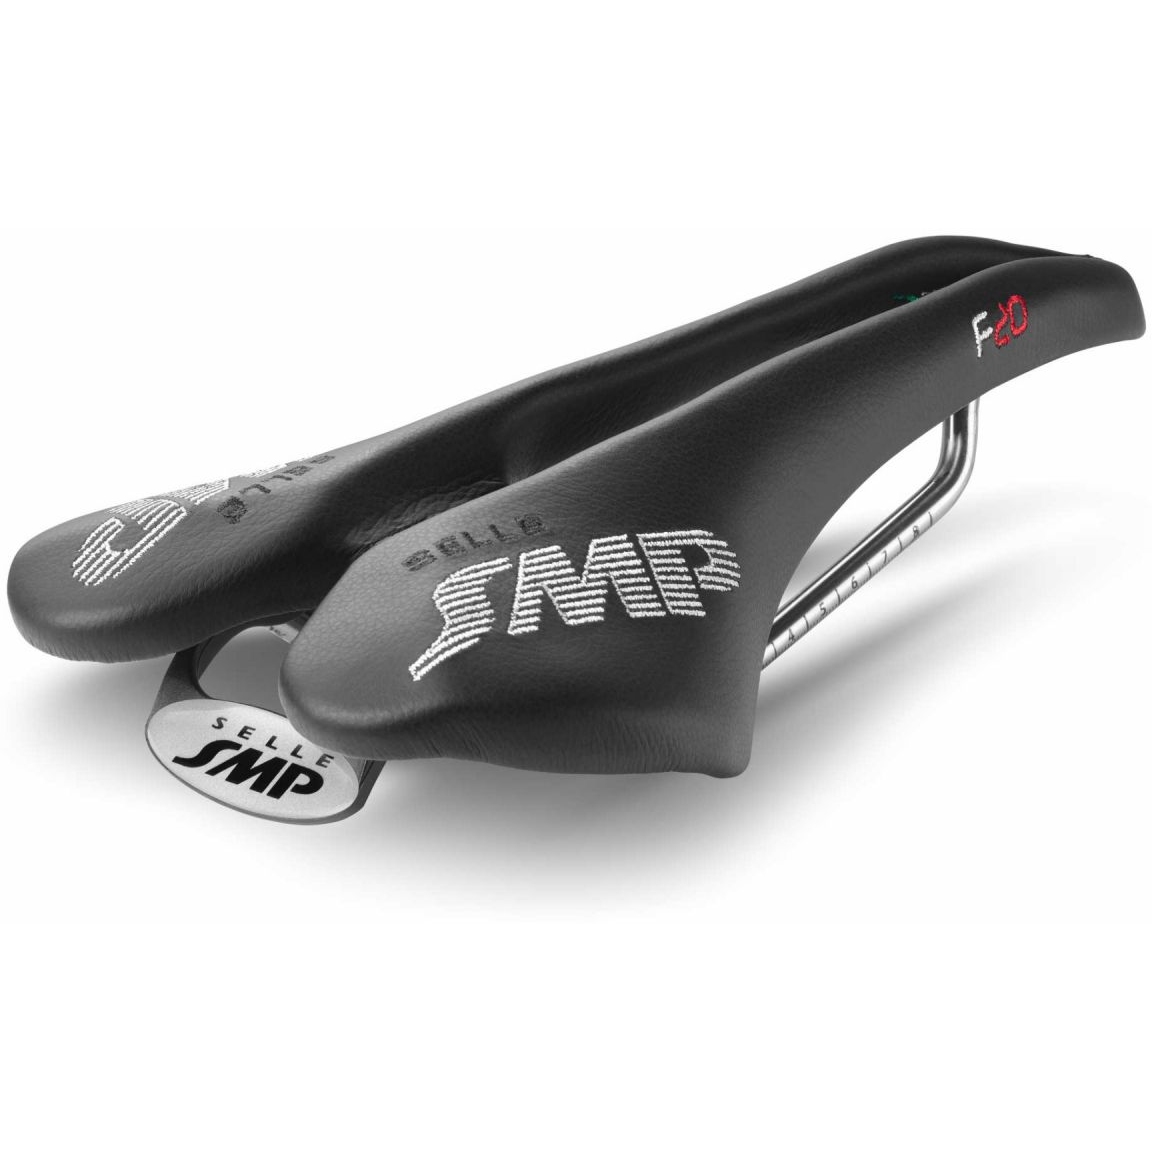 Productfoto van Selle SMP F20 Saddle - black